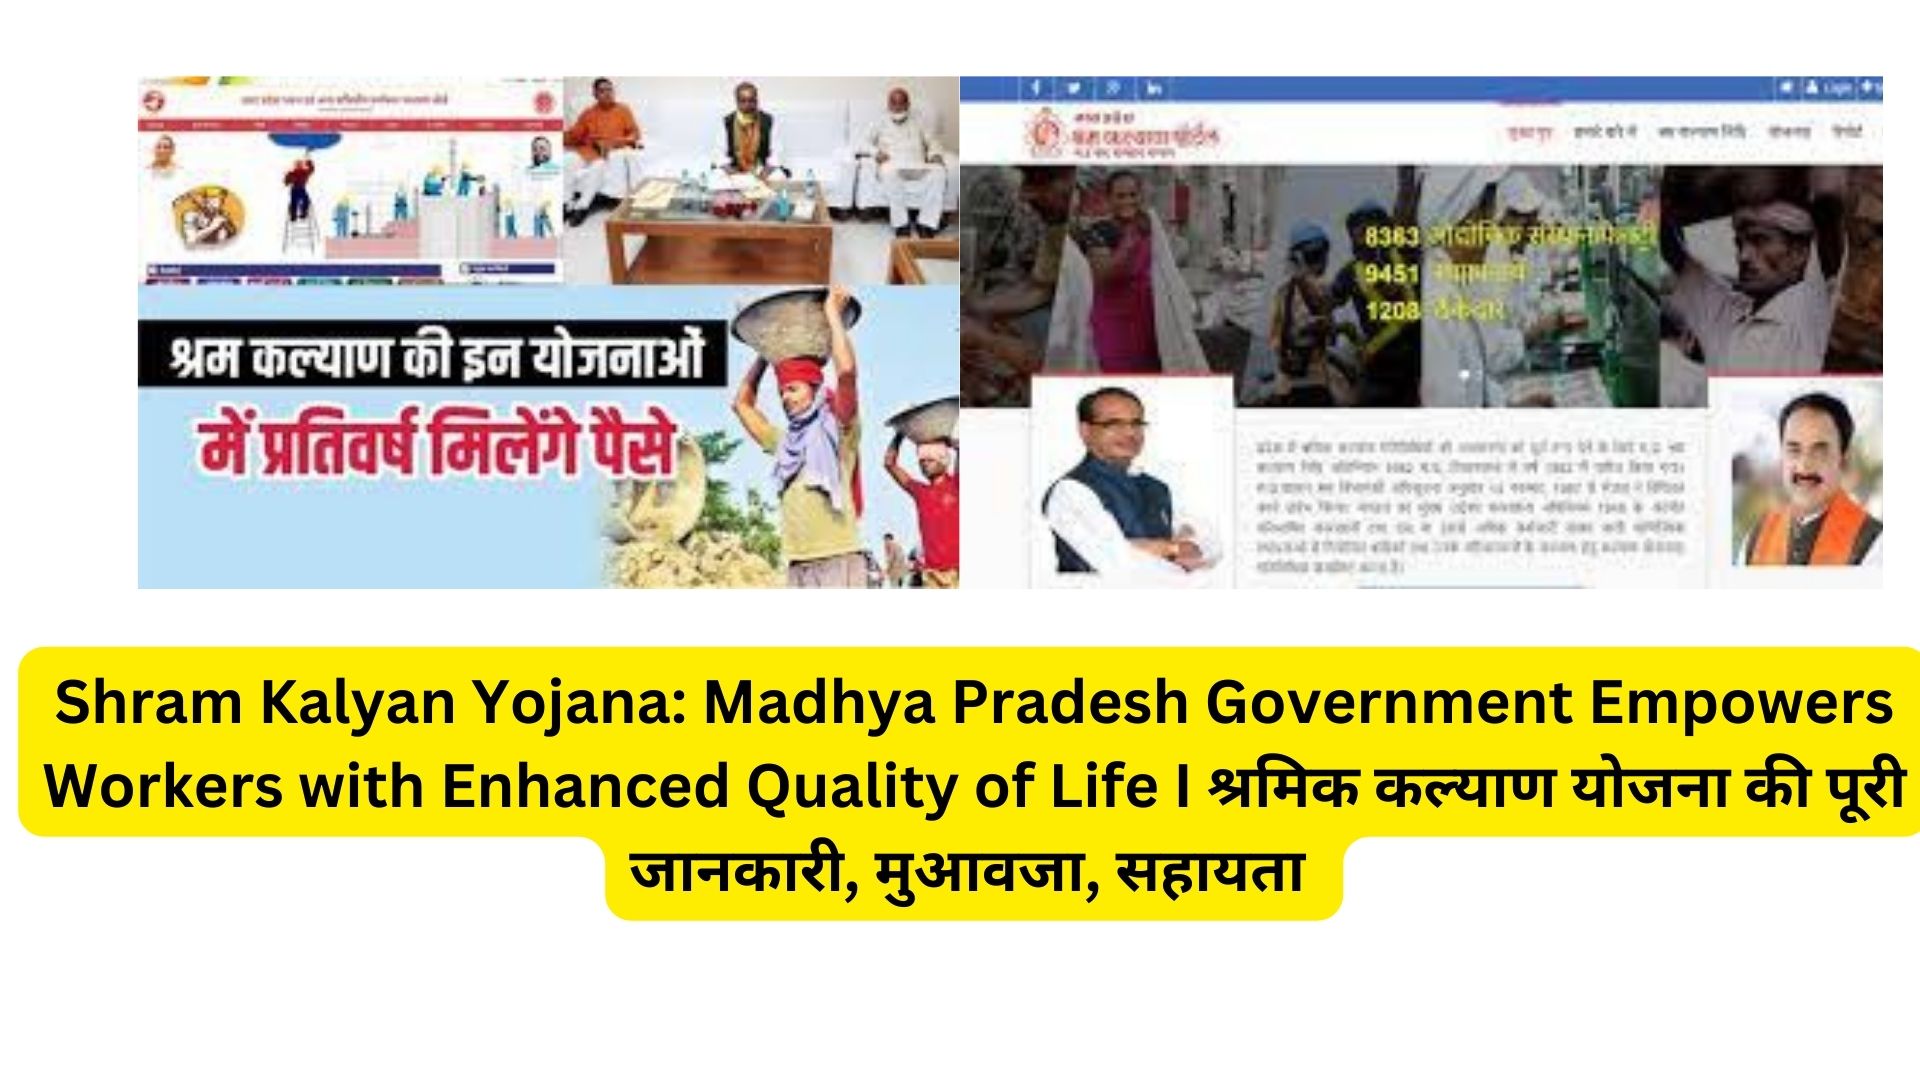 Shram Kalyan Yojana: Madhya Pradesh Government Empowers Workers with Enhanced Quality of Life I श्रमिक कल्याण योजना की पूरी जानकारी, मुआवजा, सहायता